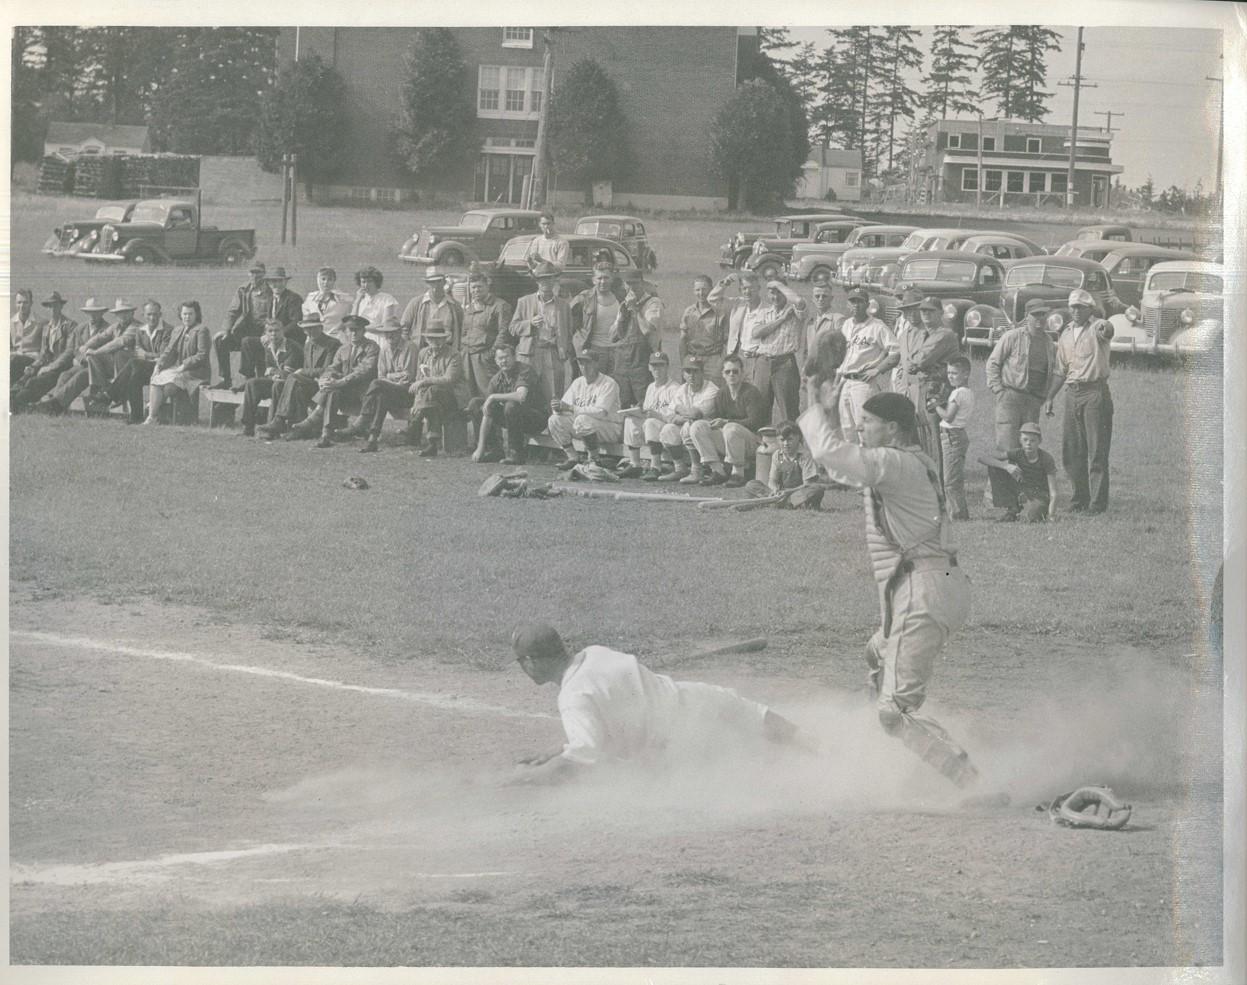 NSH Baseball, image of player sliding into home base (undated)